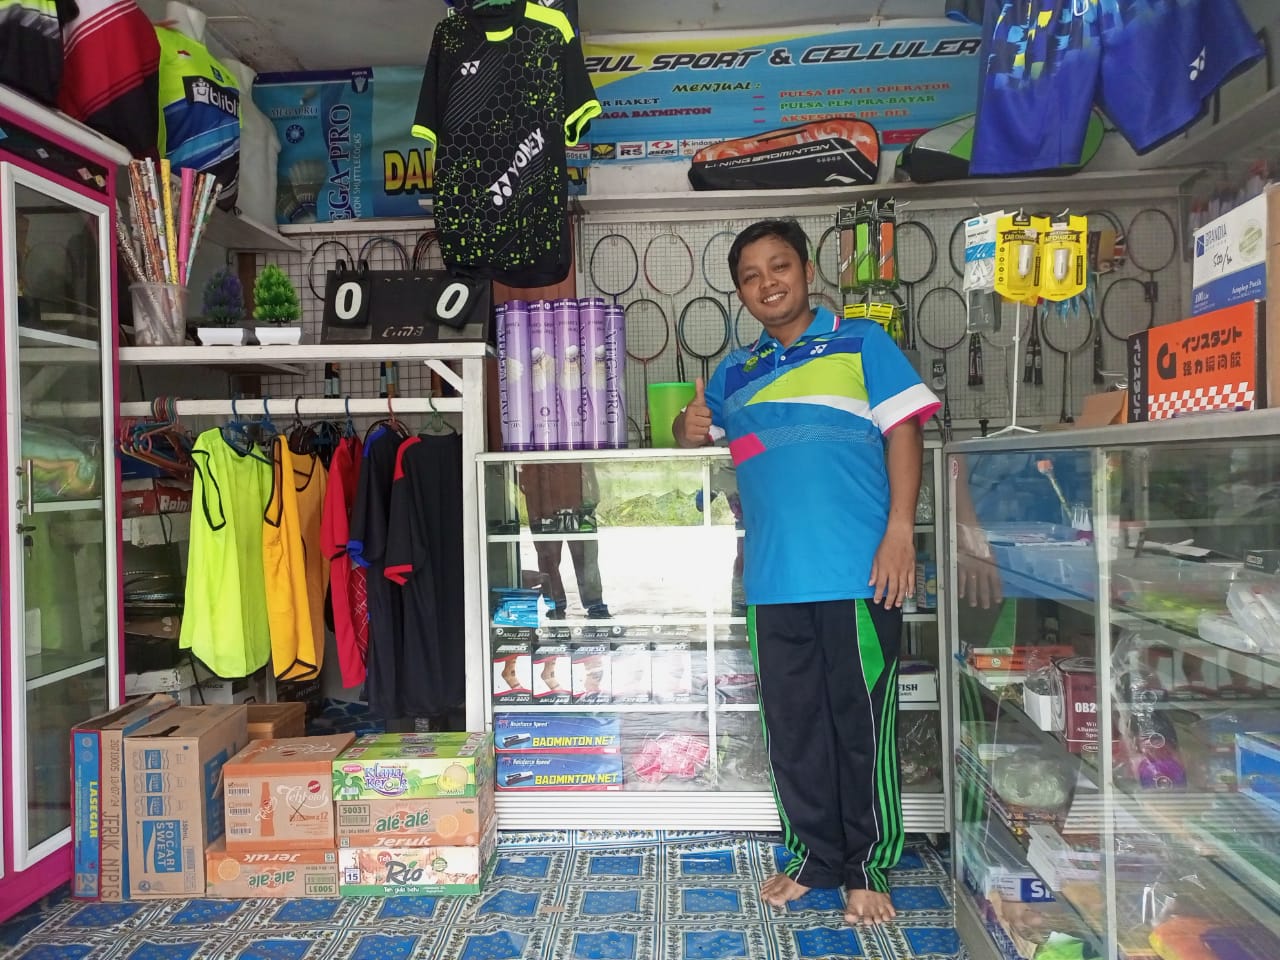 20230130 Zul Efendi (34) warga Desa Pelangas, Kecamatan Simpang Teritip, Kabupaten Bangka Barat menjalankan usaha toko olahraga.